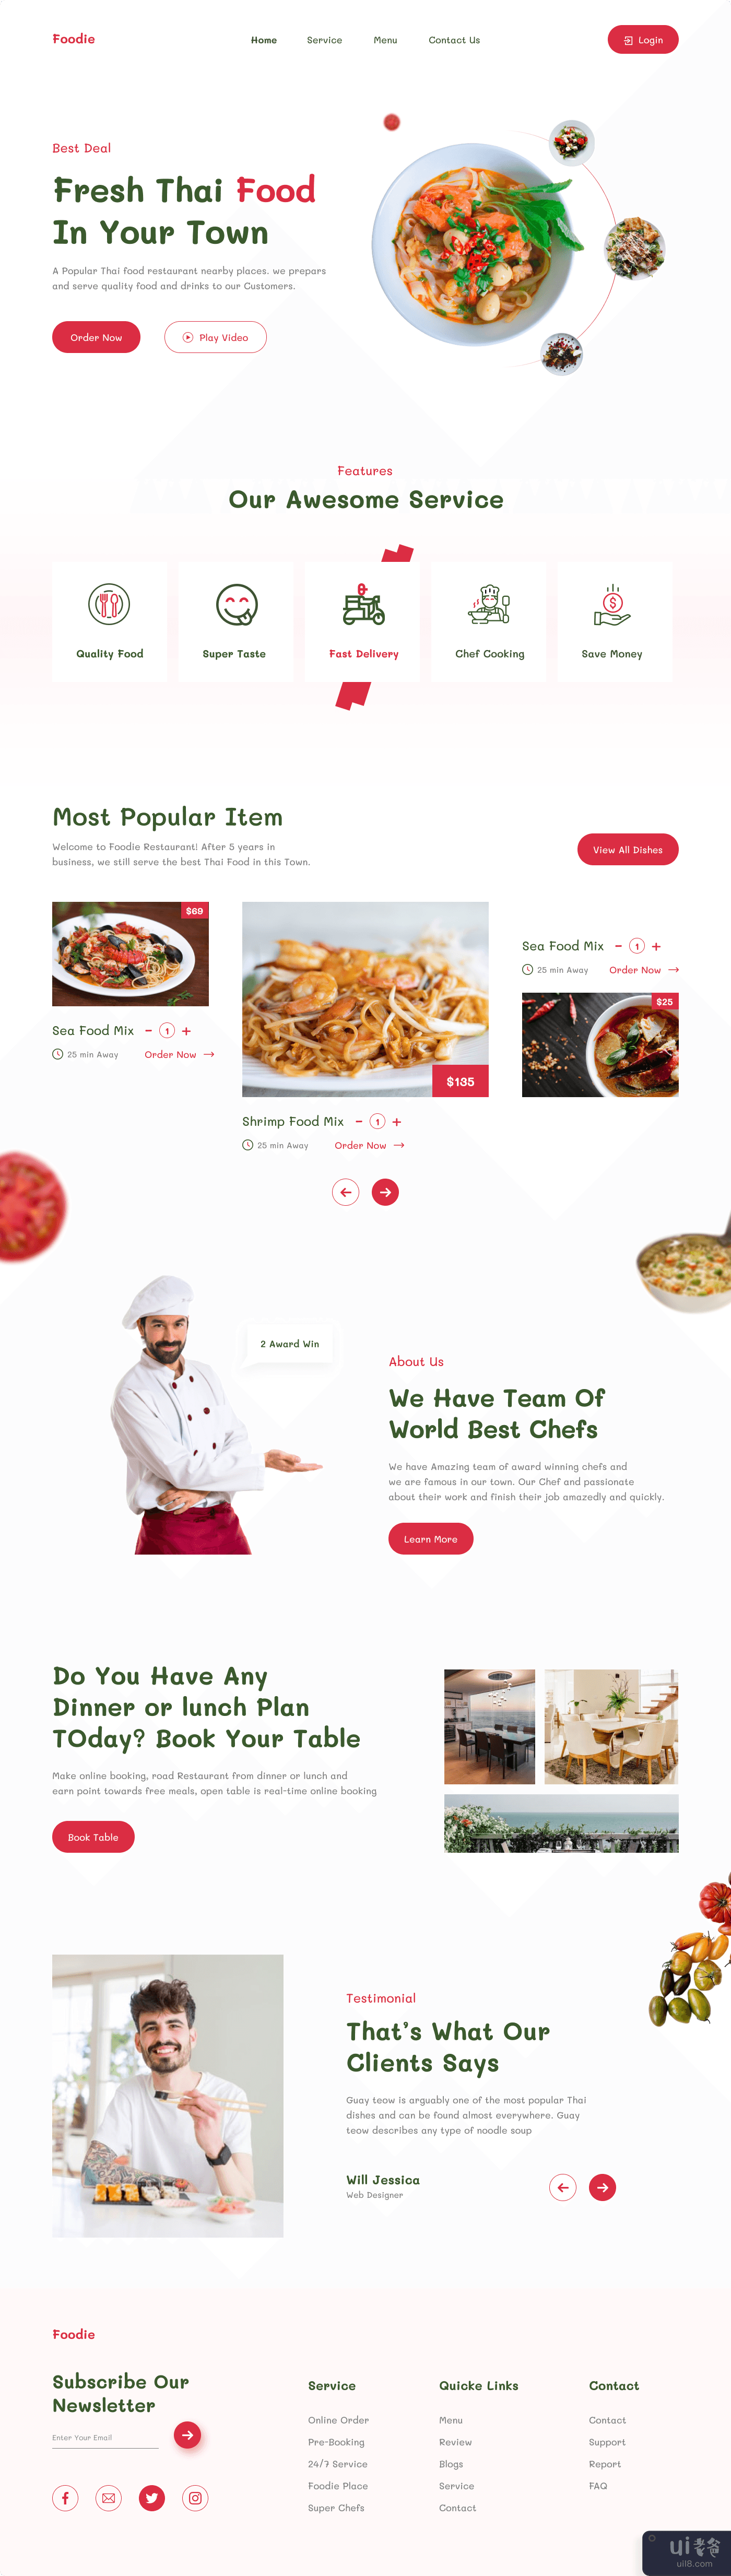 餐厅登陆页面设计(Restaurant Landing Page Design)插图